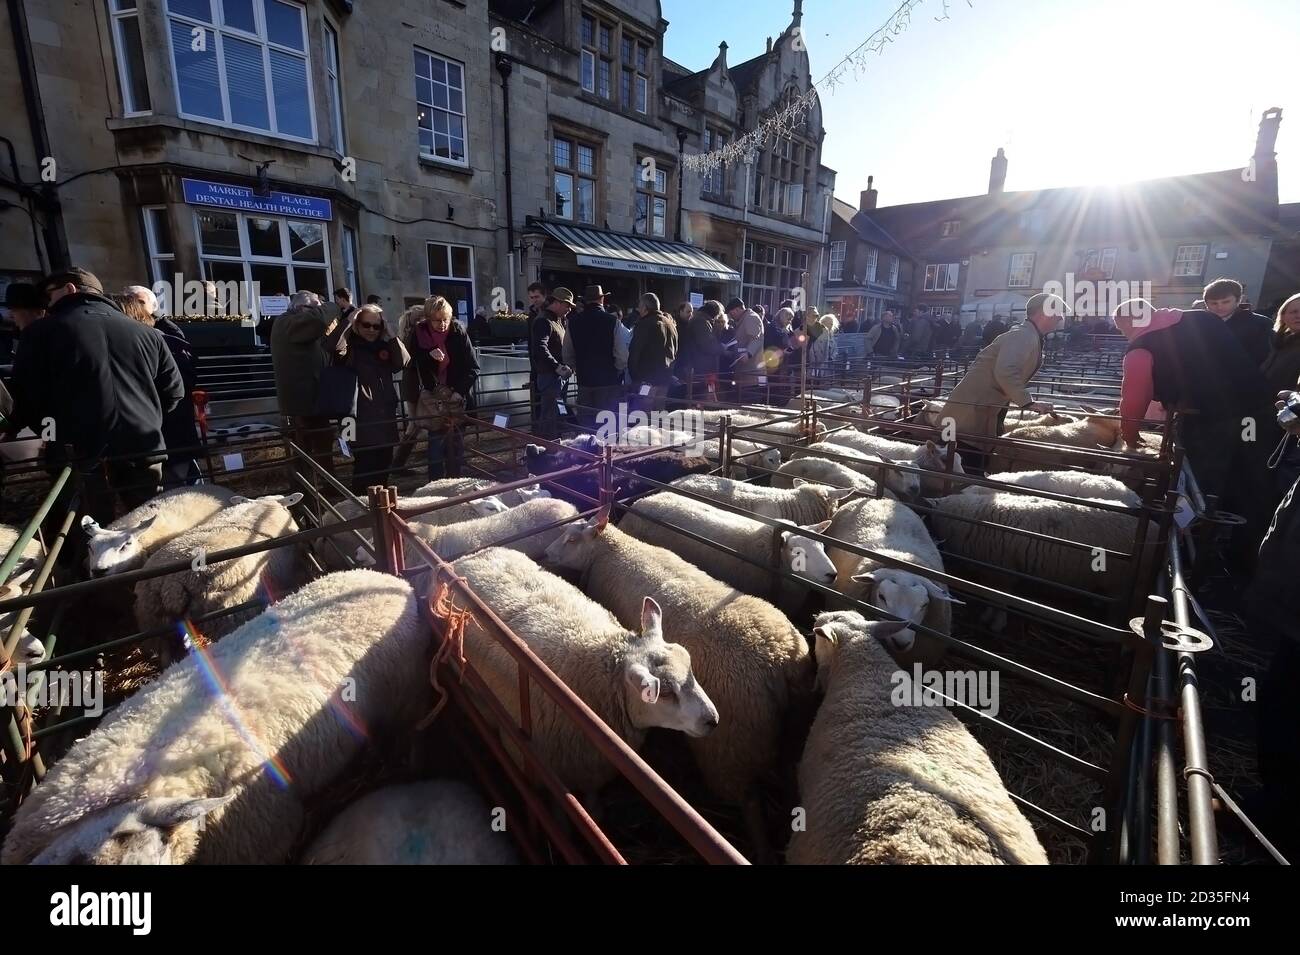 Uppingham ( Rutland ) Fat Stock Show 02.12.15 U.K. Sheep Pigs and cattle market English rural life Stock Photo